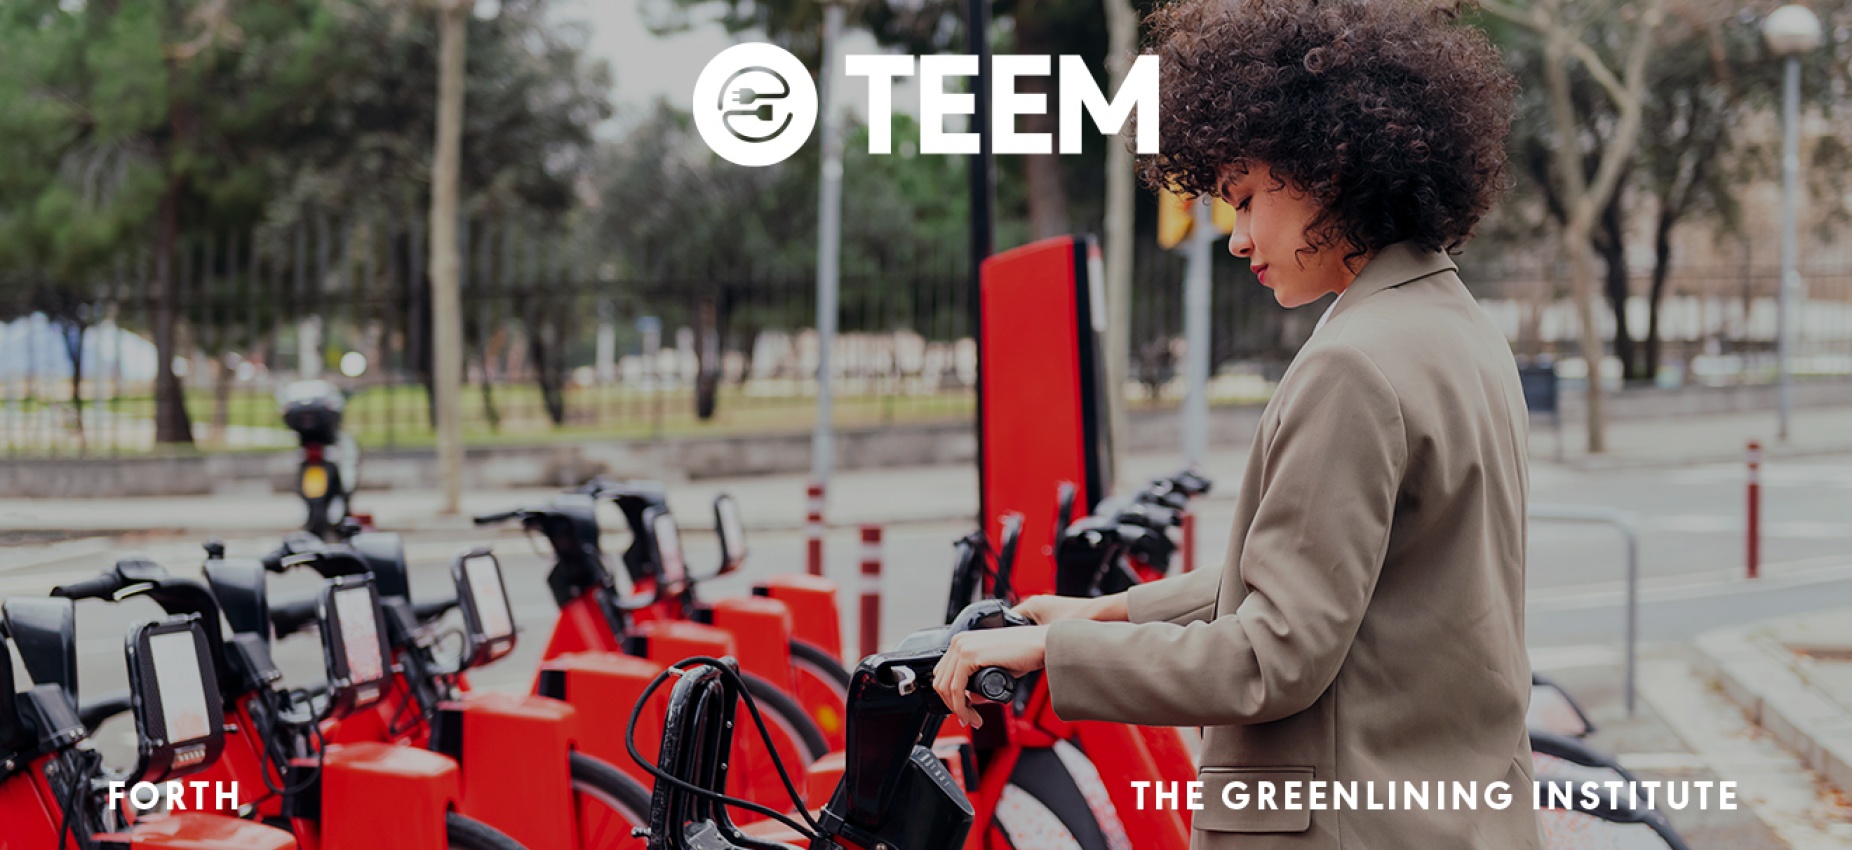 Woman of color exploring e-bikes. TEEM Platform